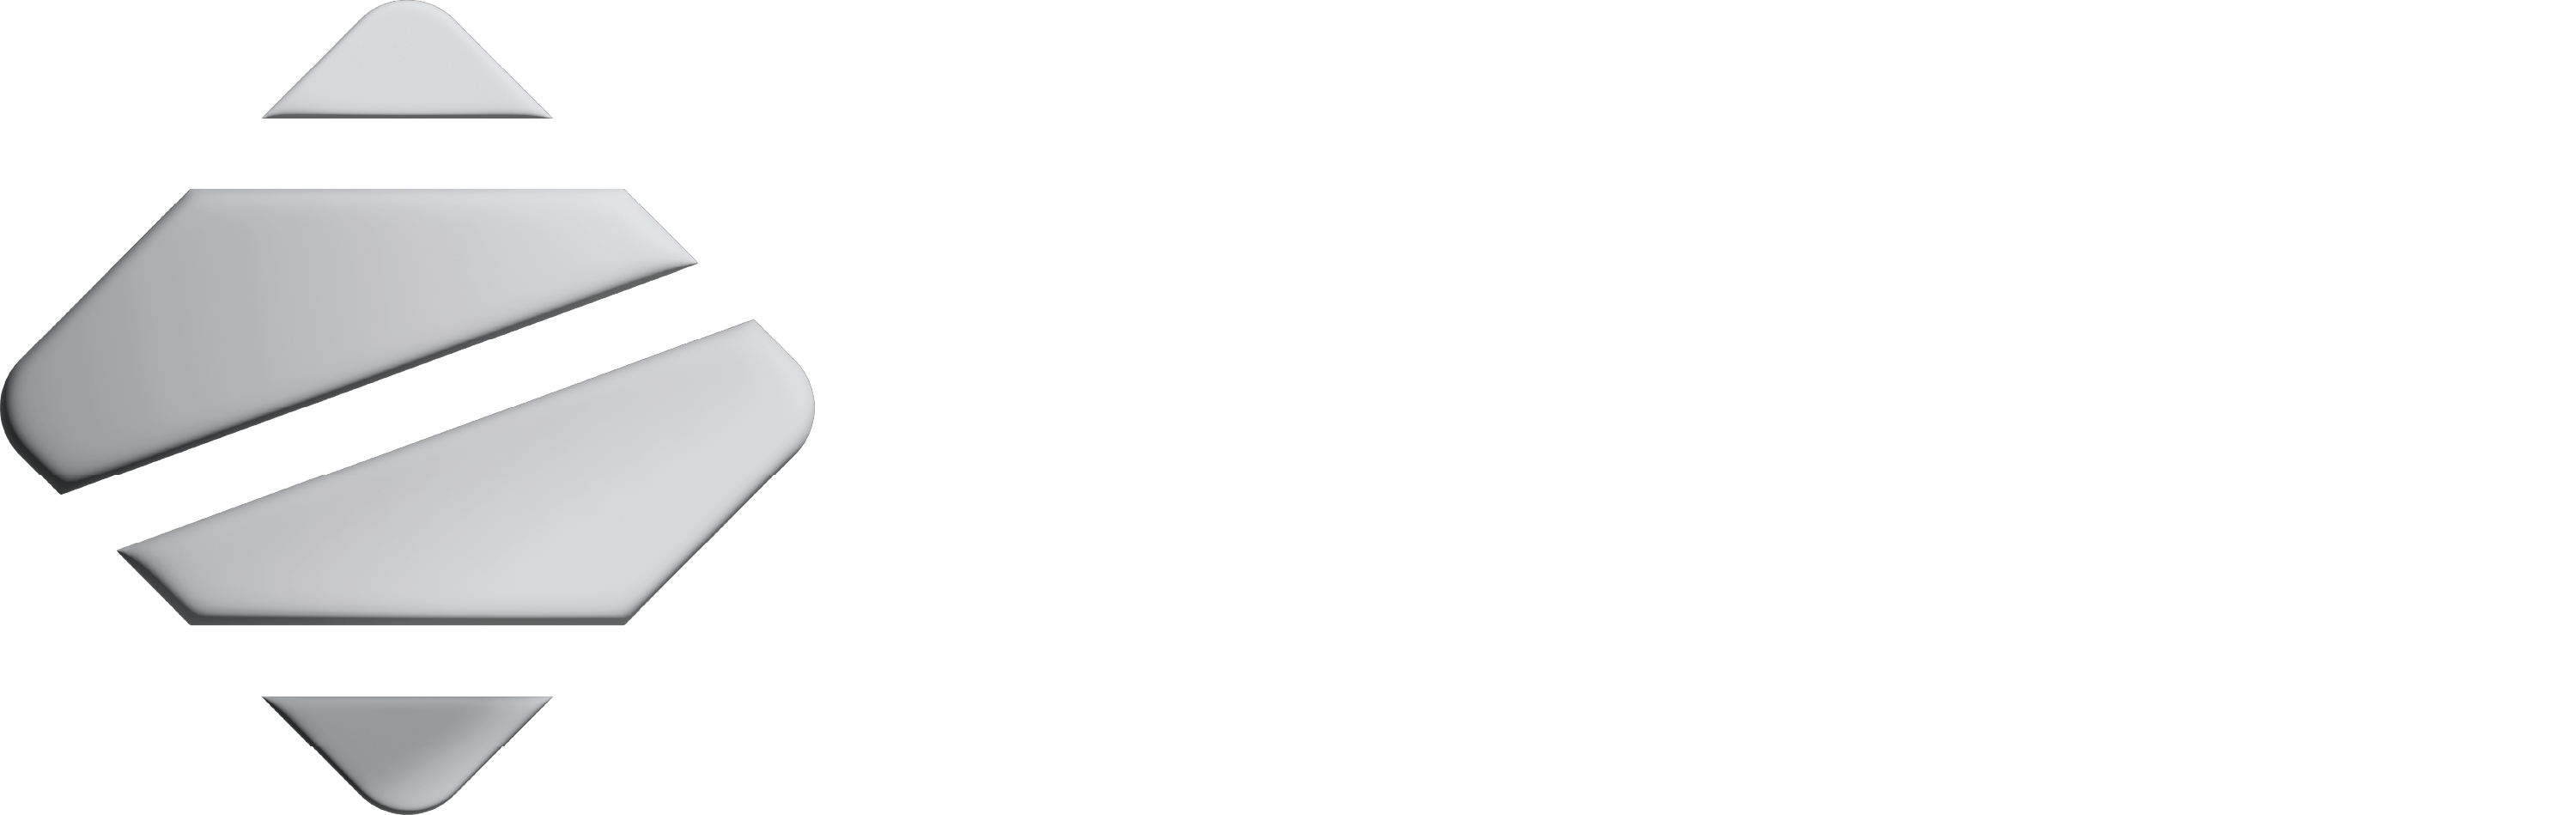 Zinia - Office 365 Backups